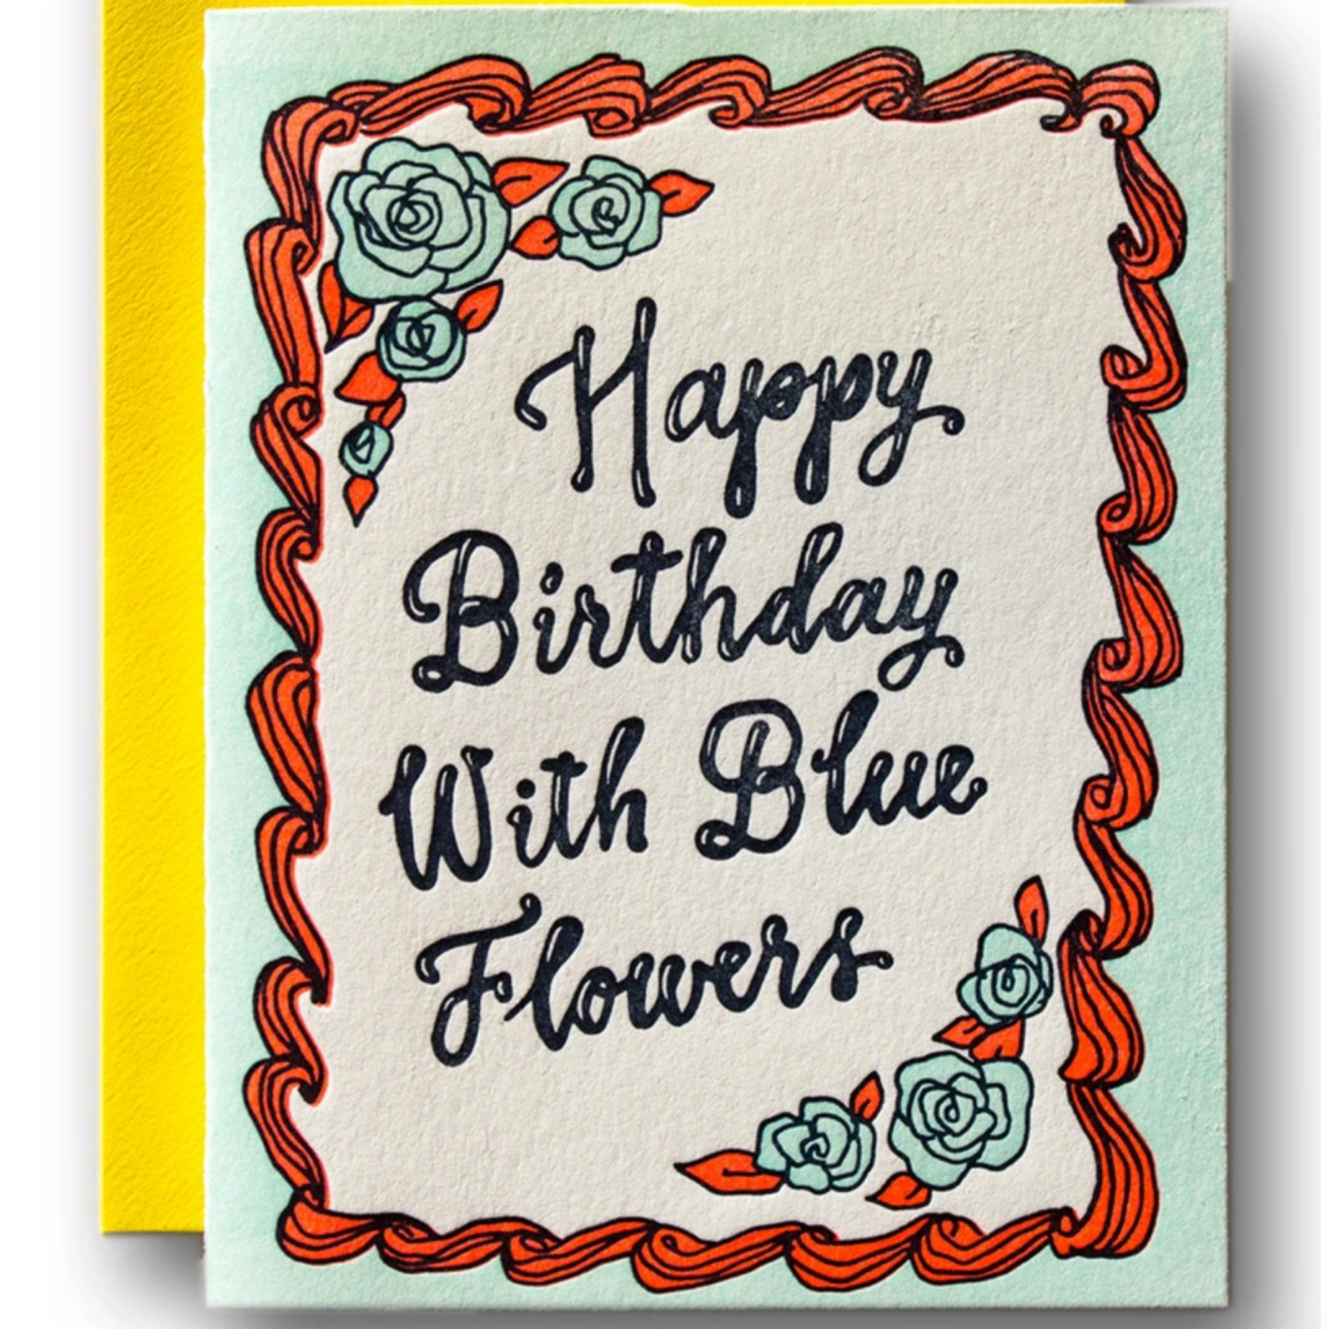 Happy Birthday With Blue Flowers -birthday